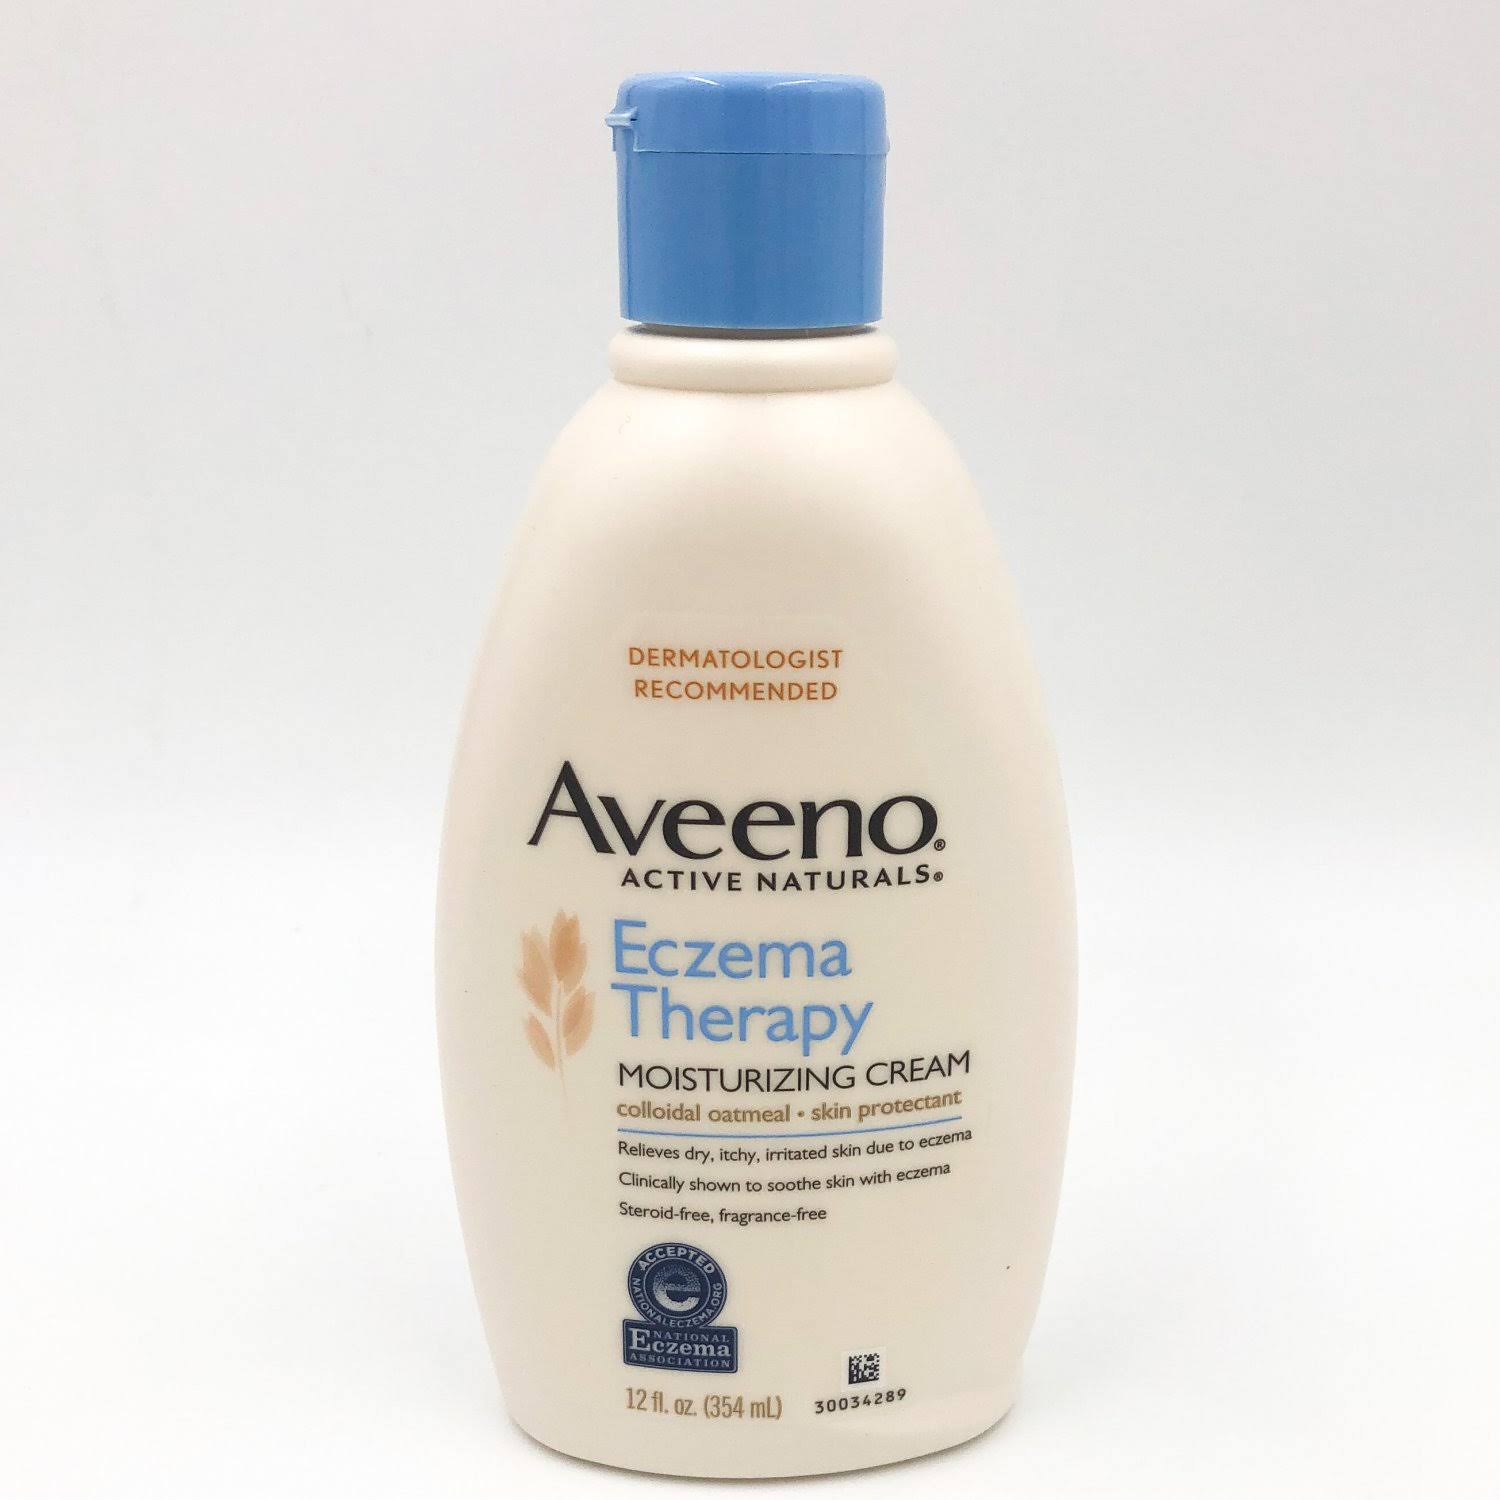 Aveeno Active Naturals Eczema Therapy Moisturizing Cream - 12oz